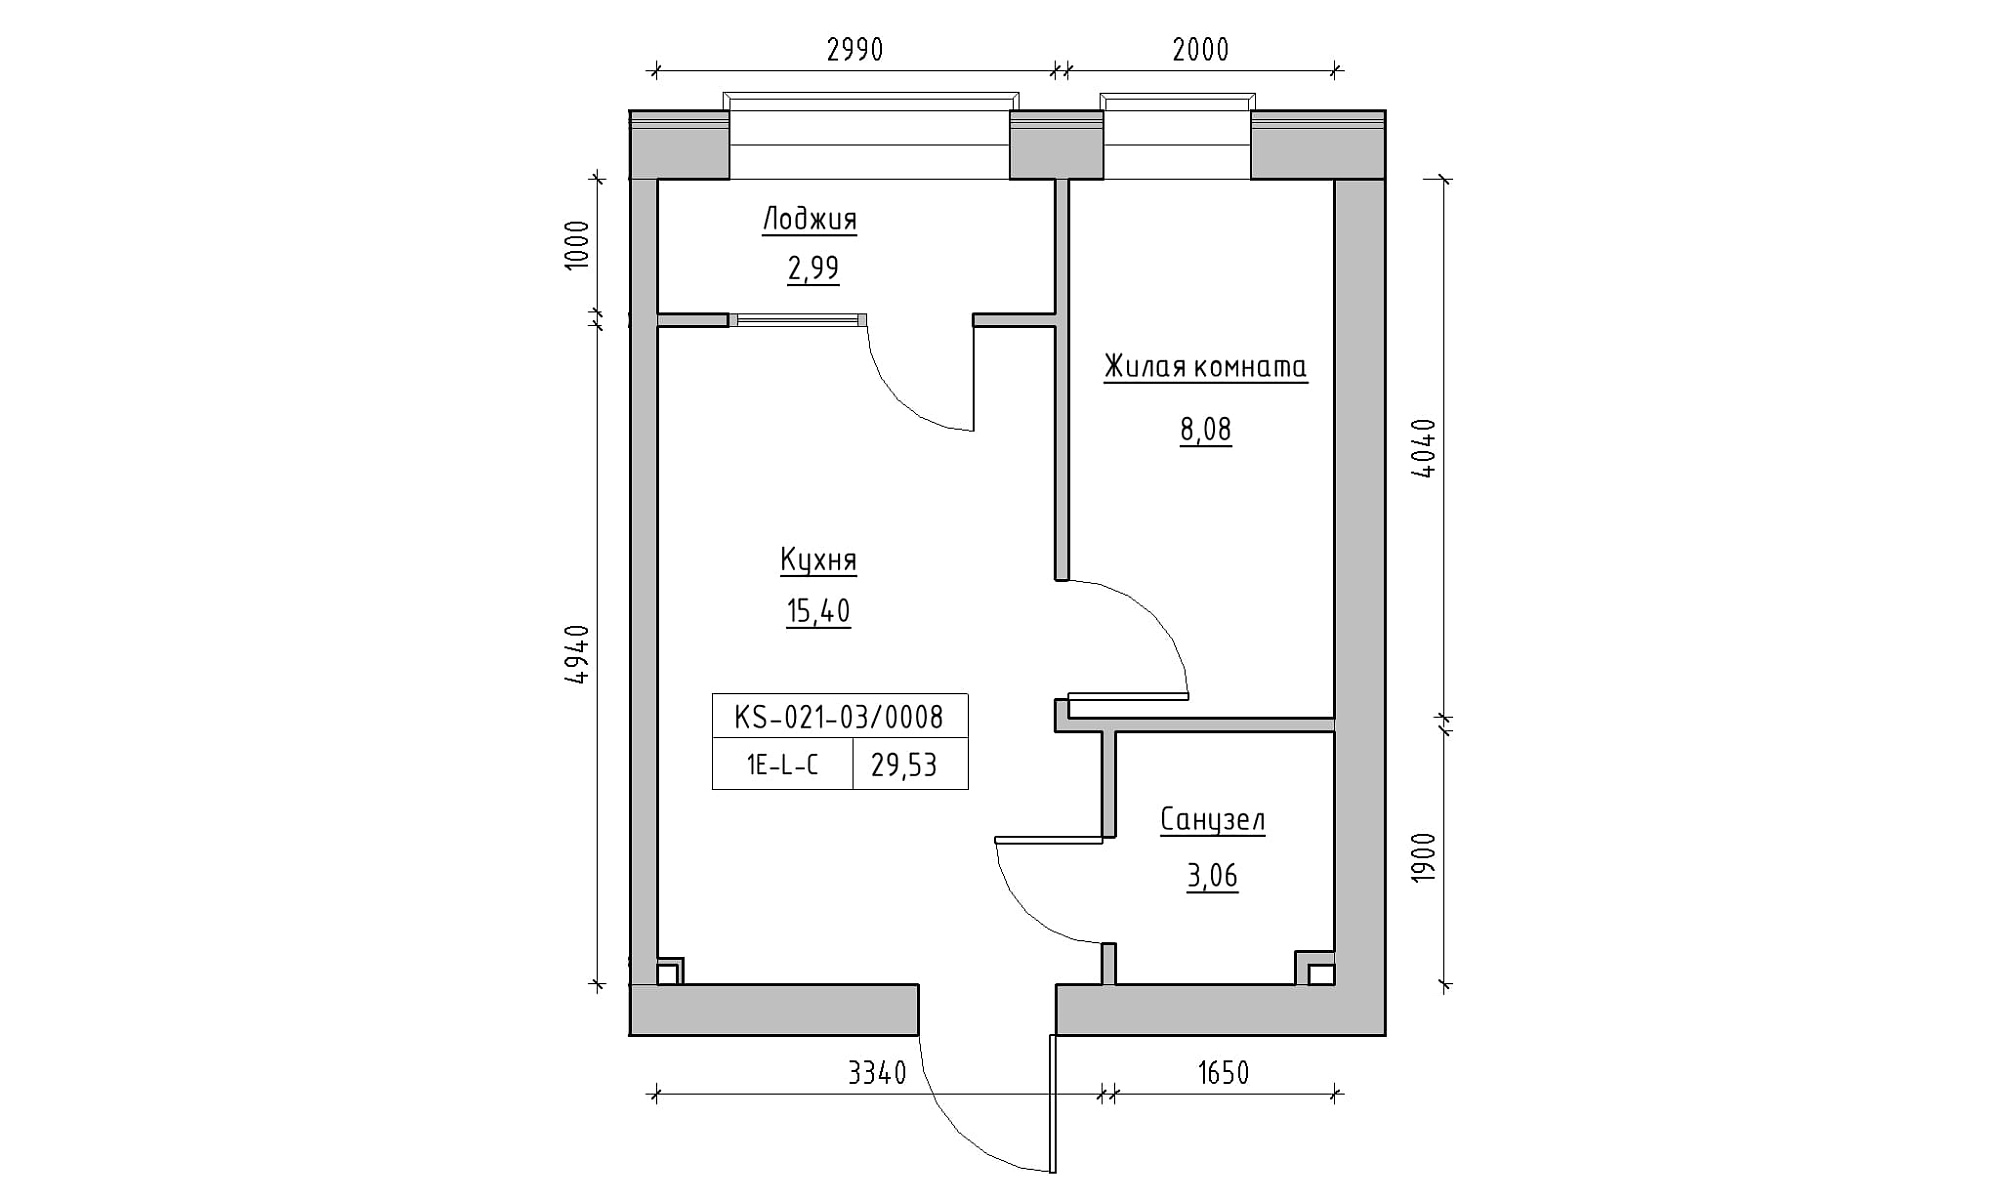 Planning 1-rm flats area 29.53m2, KS-021-03/0008.